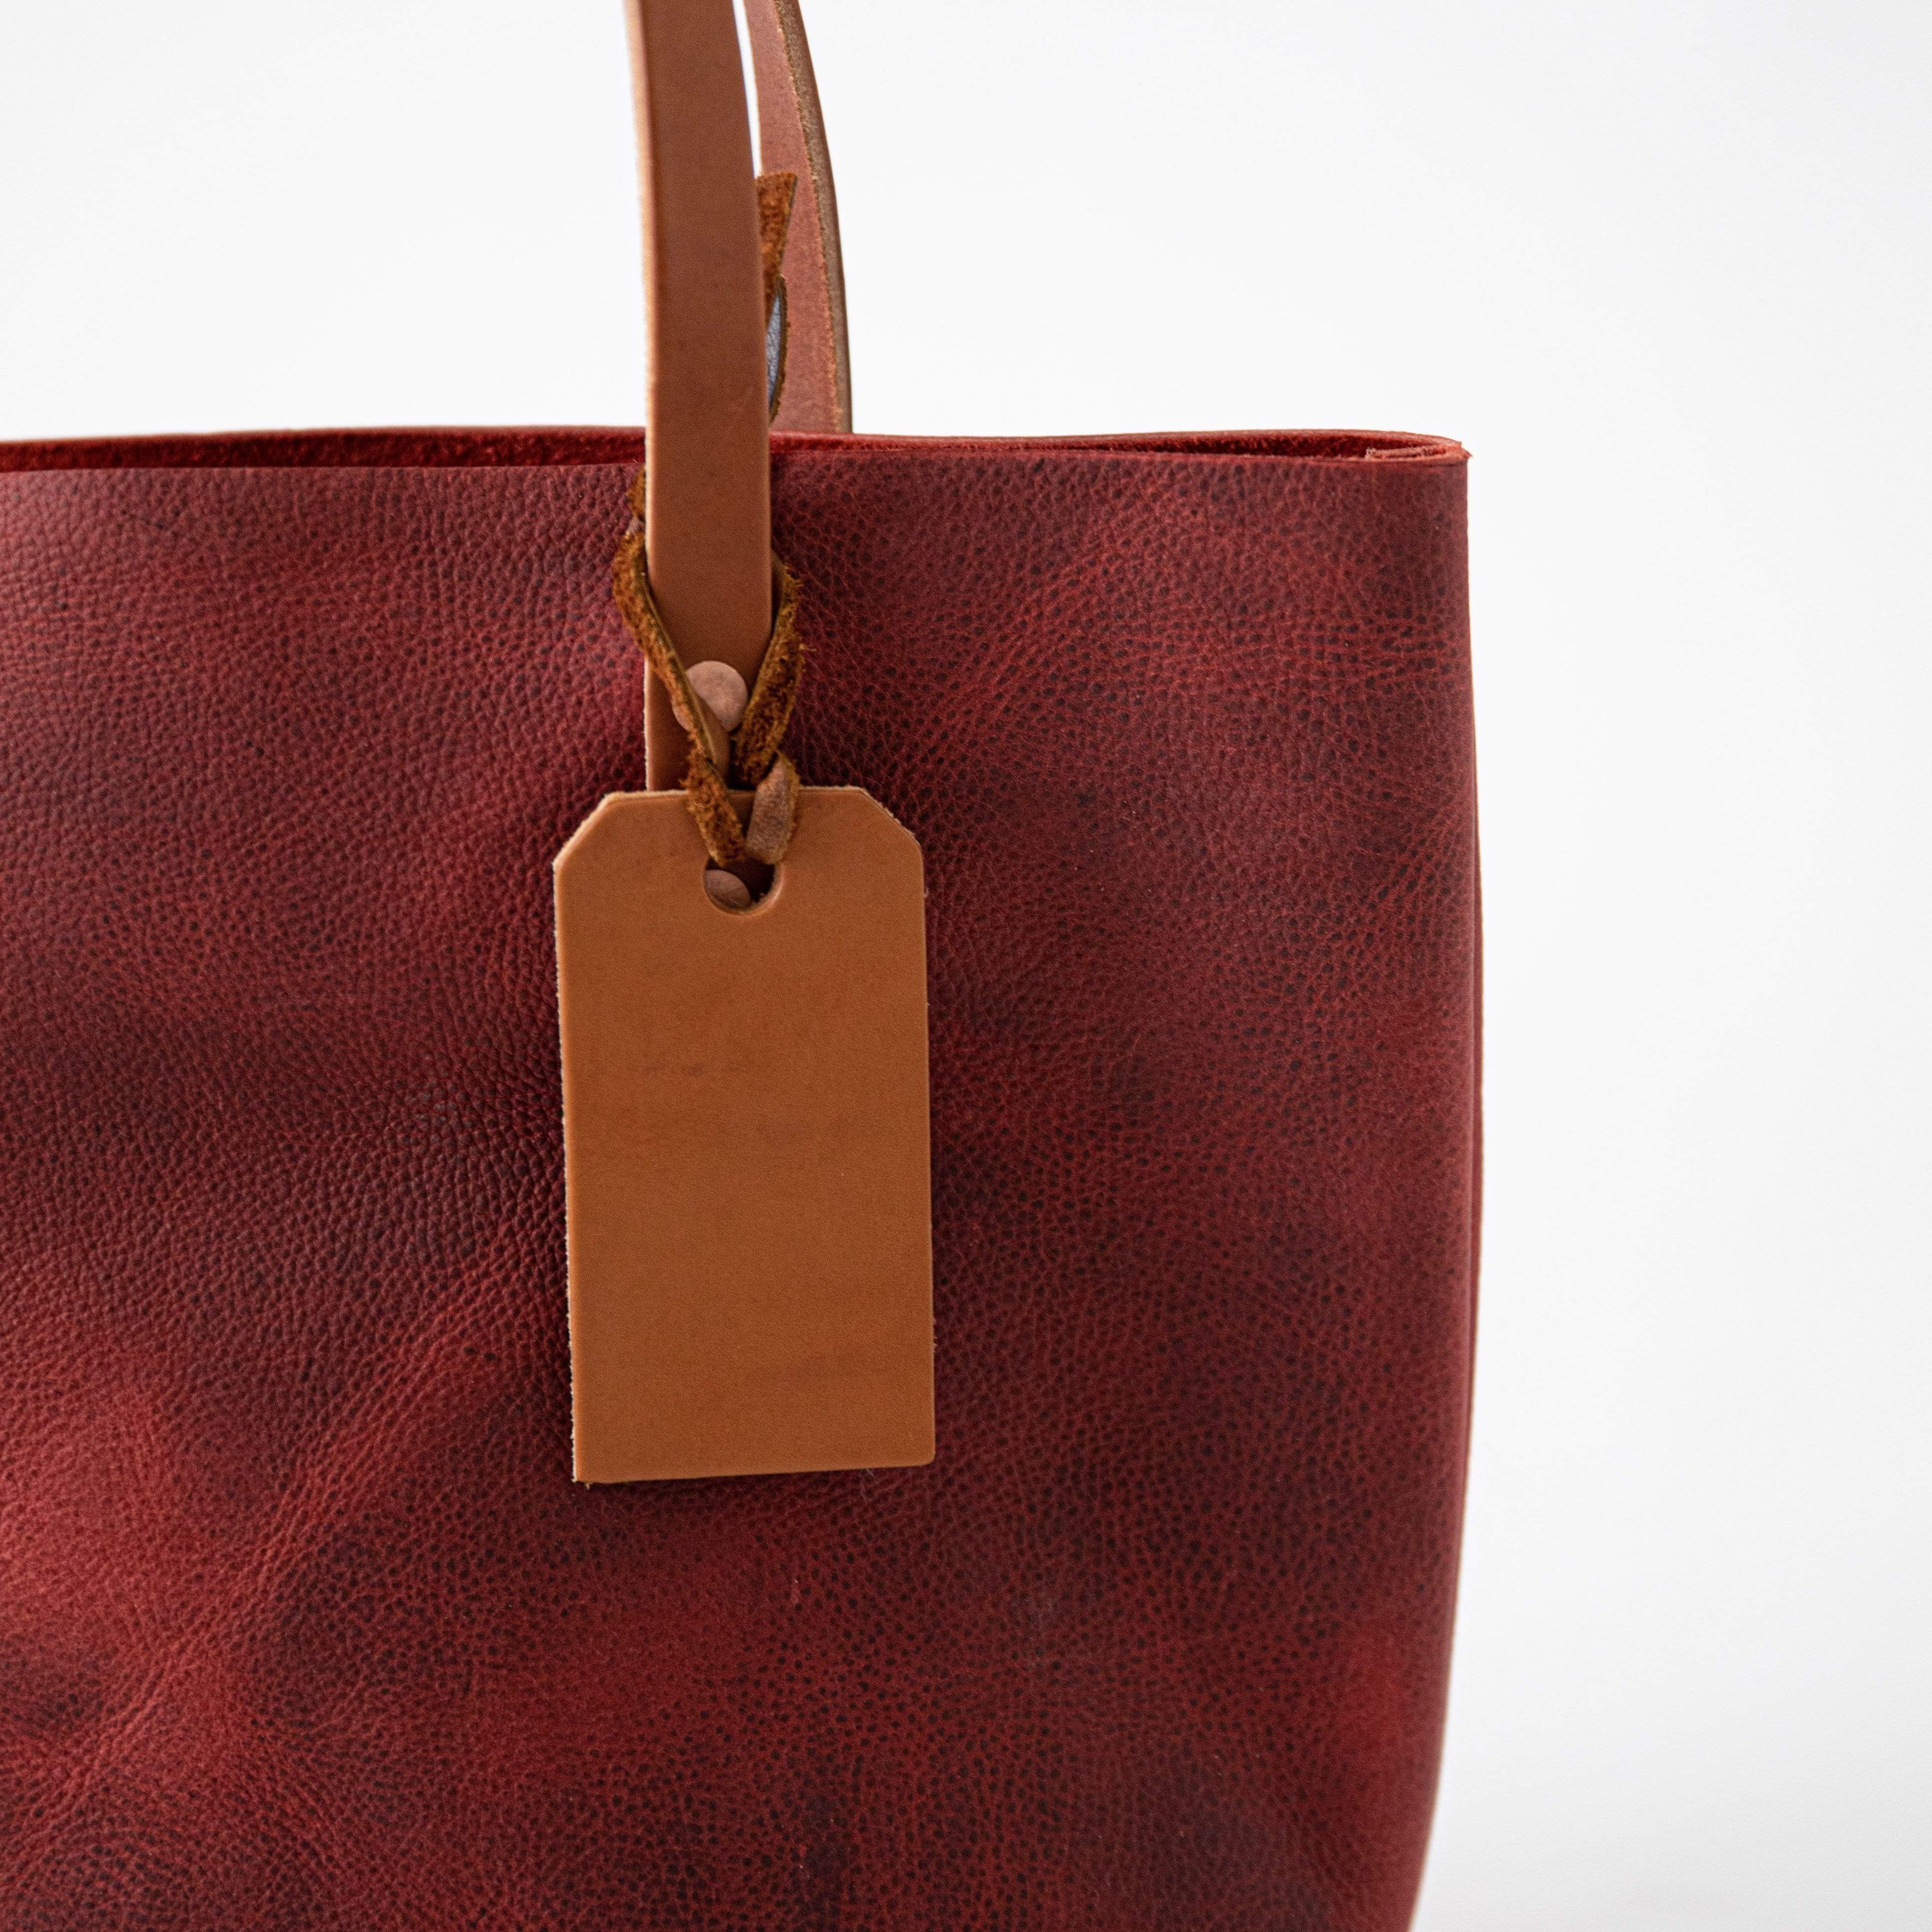 Red Kodiak Tote- red tote bag handmade in America